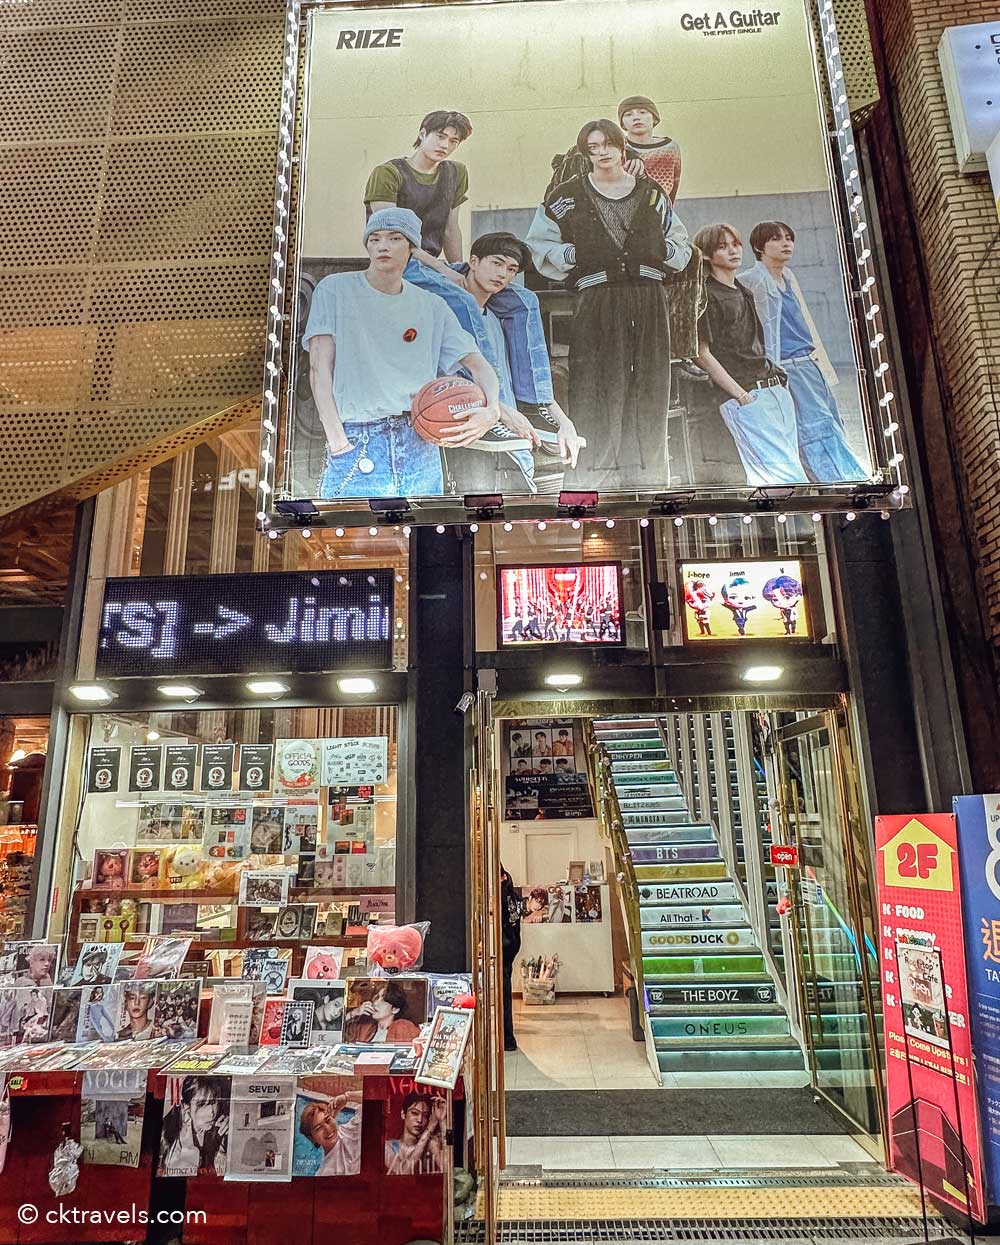 All That K K-pop shop in Myeongdong, Seoul, South Korea